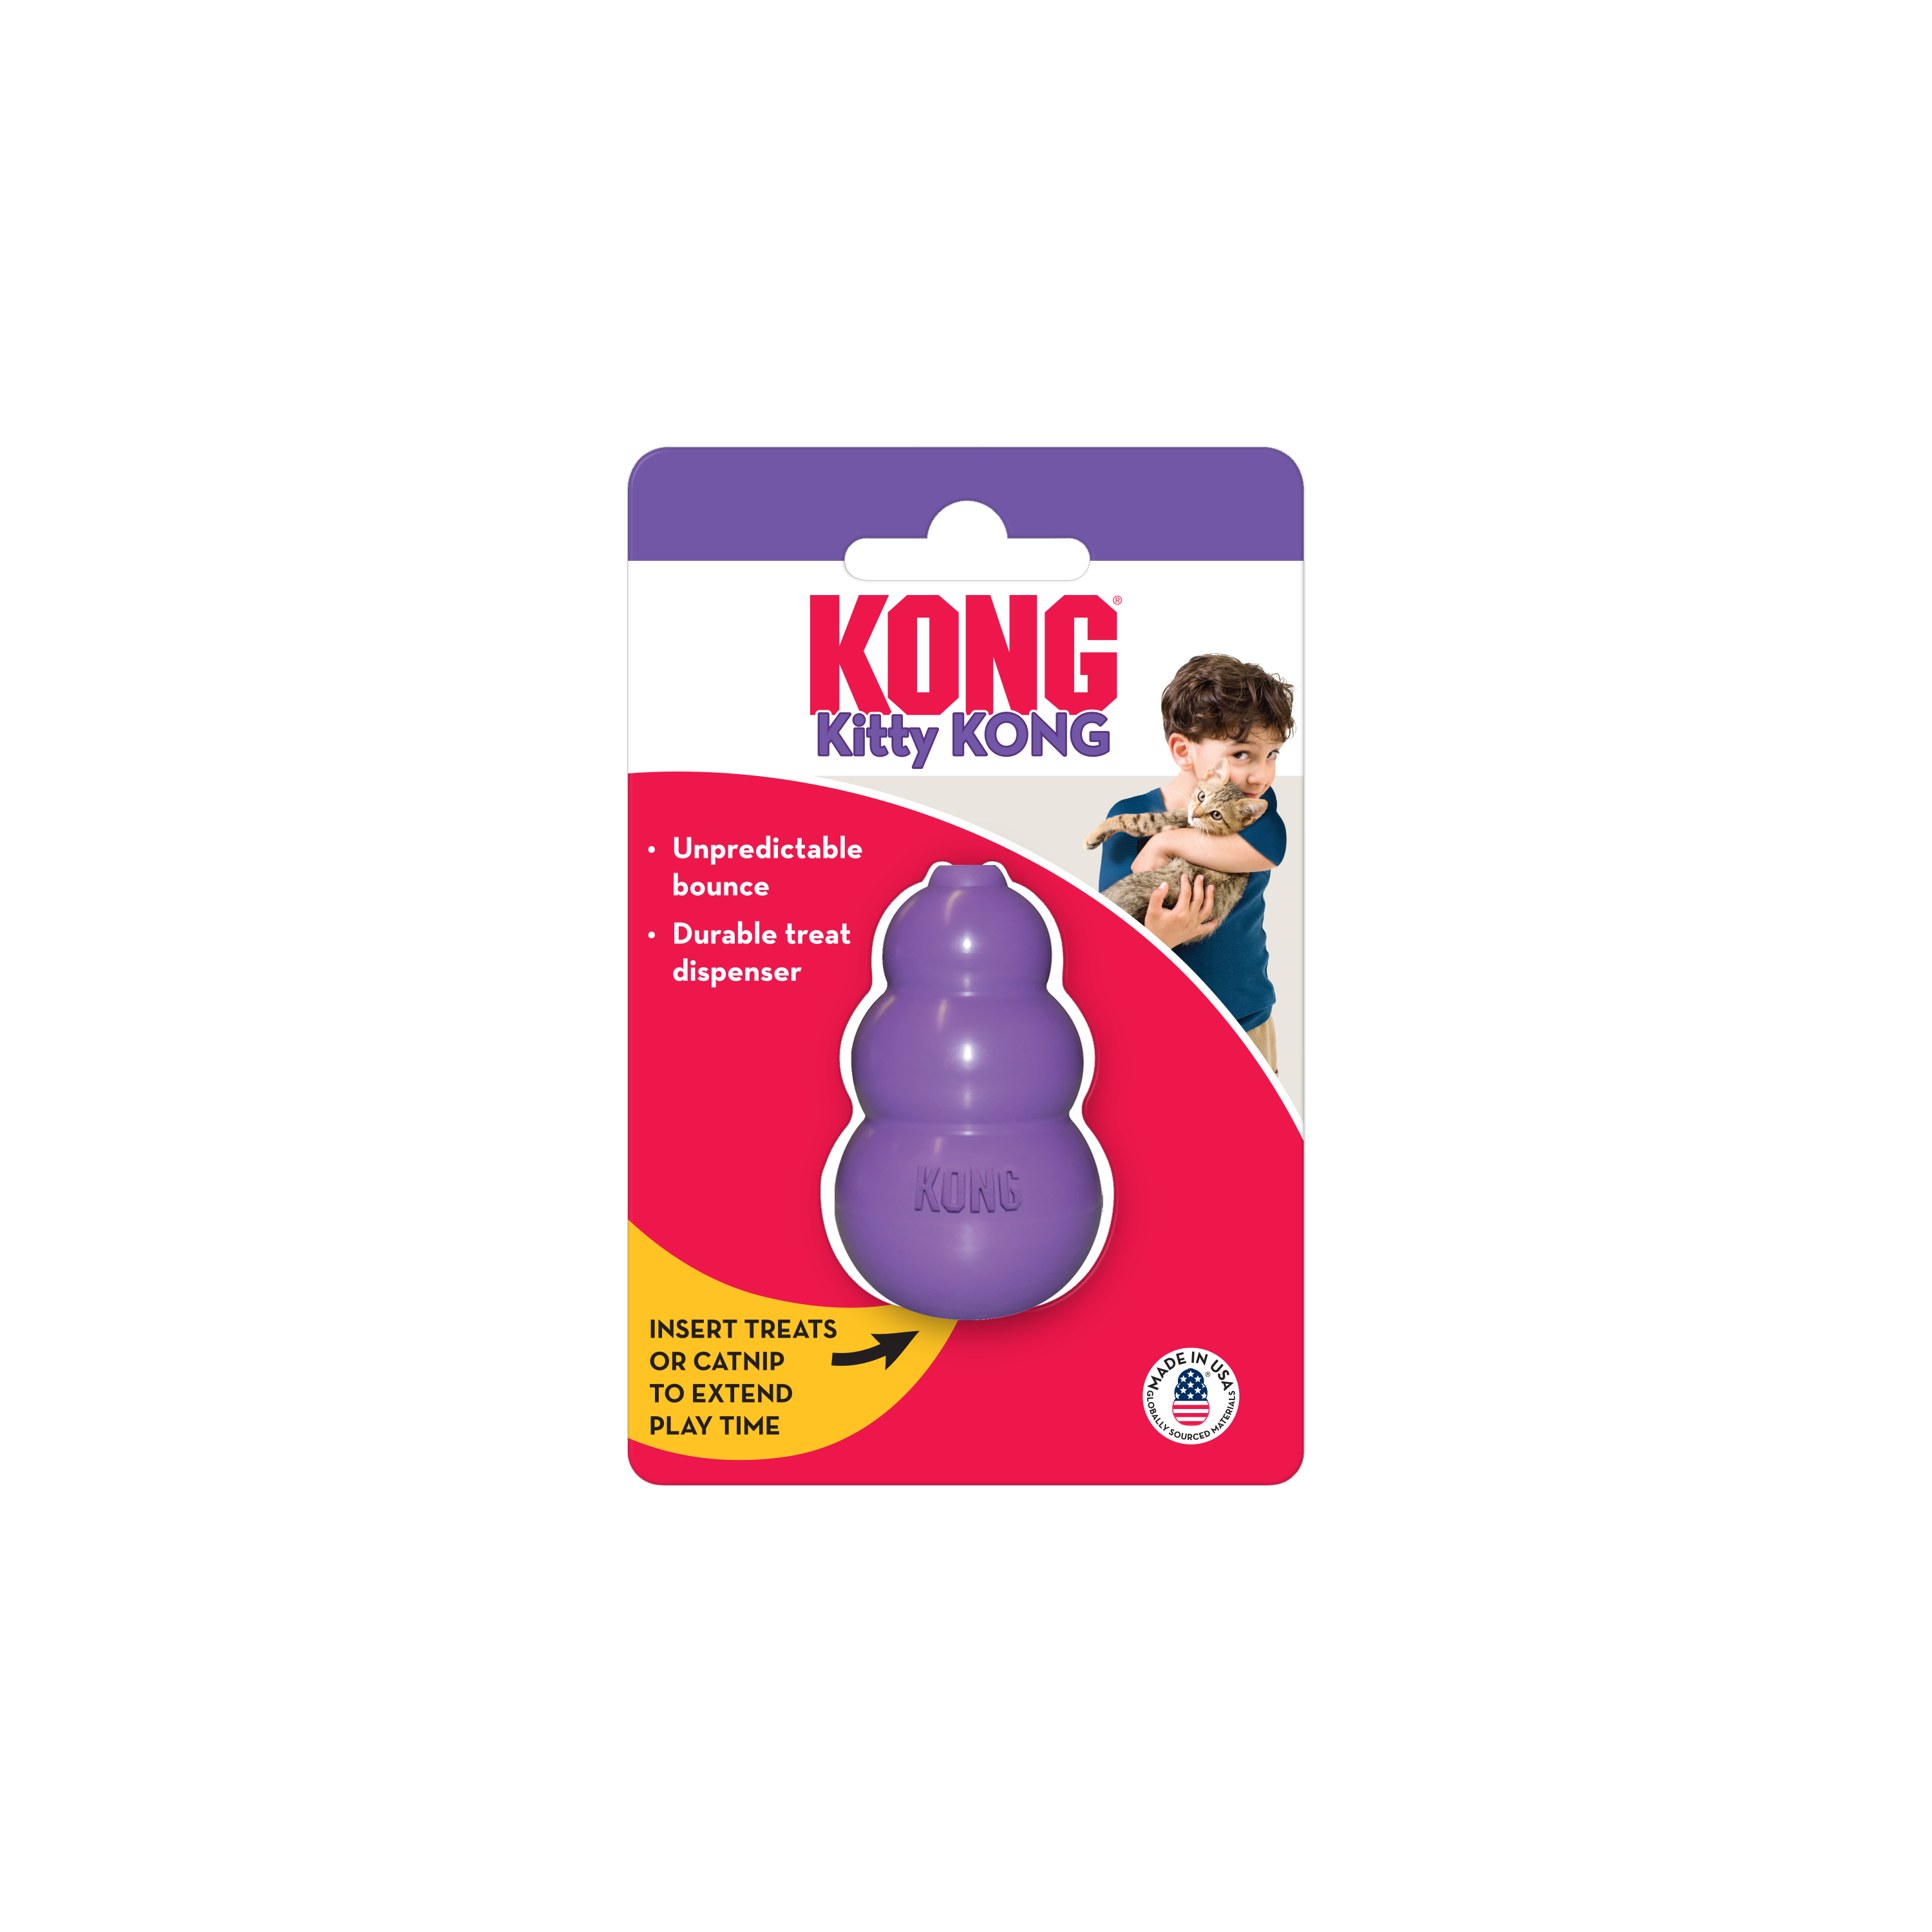 Kitty KONG product image